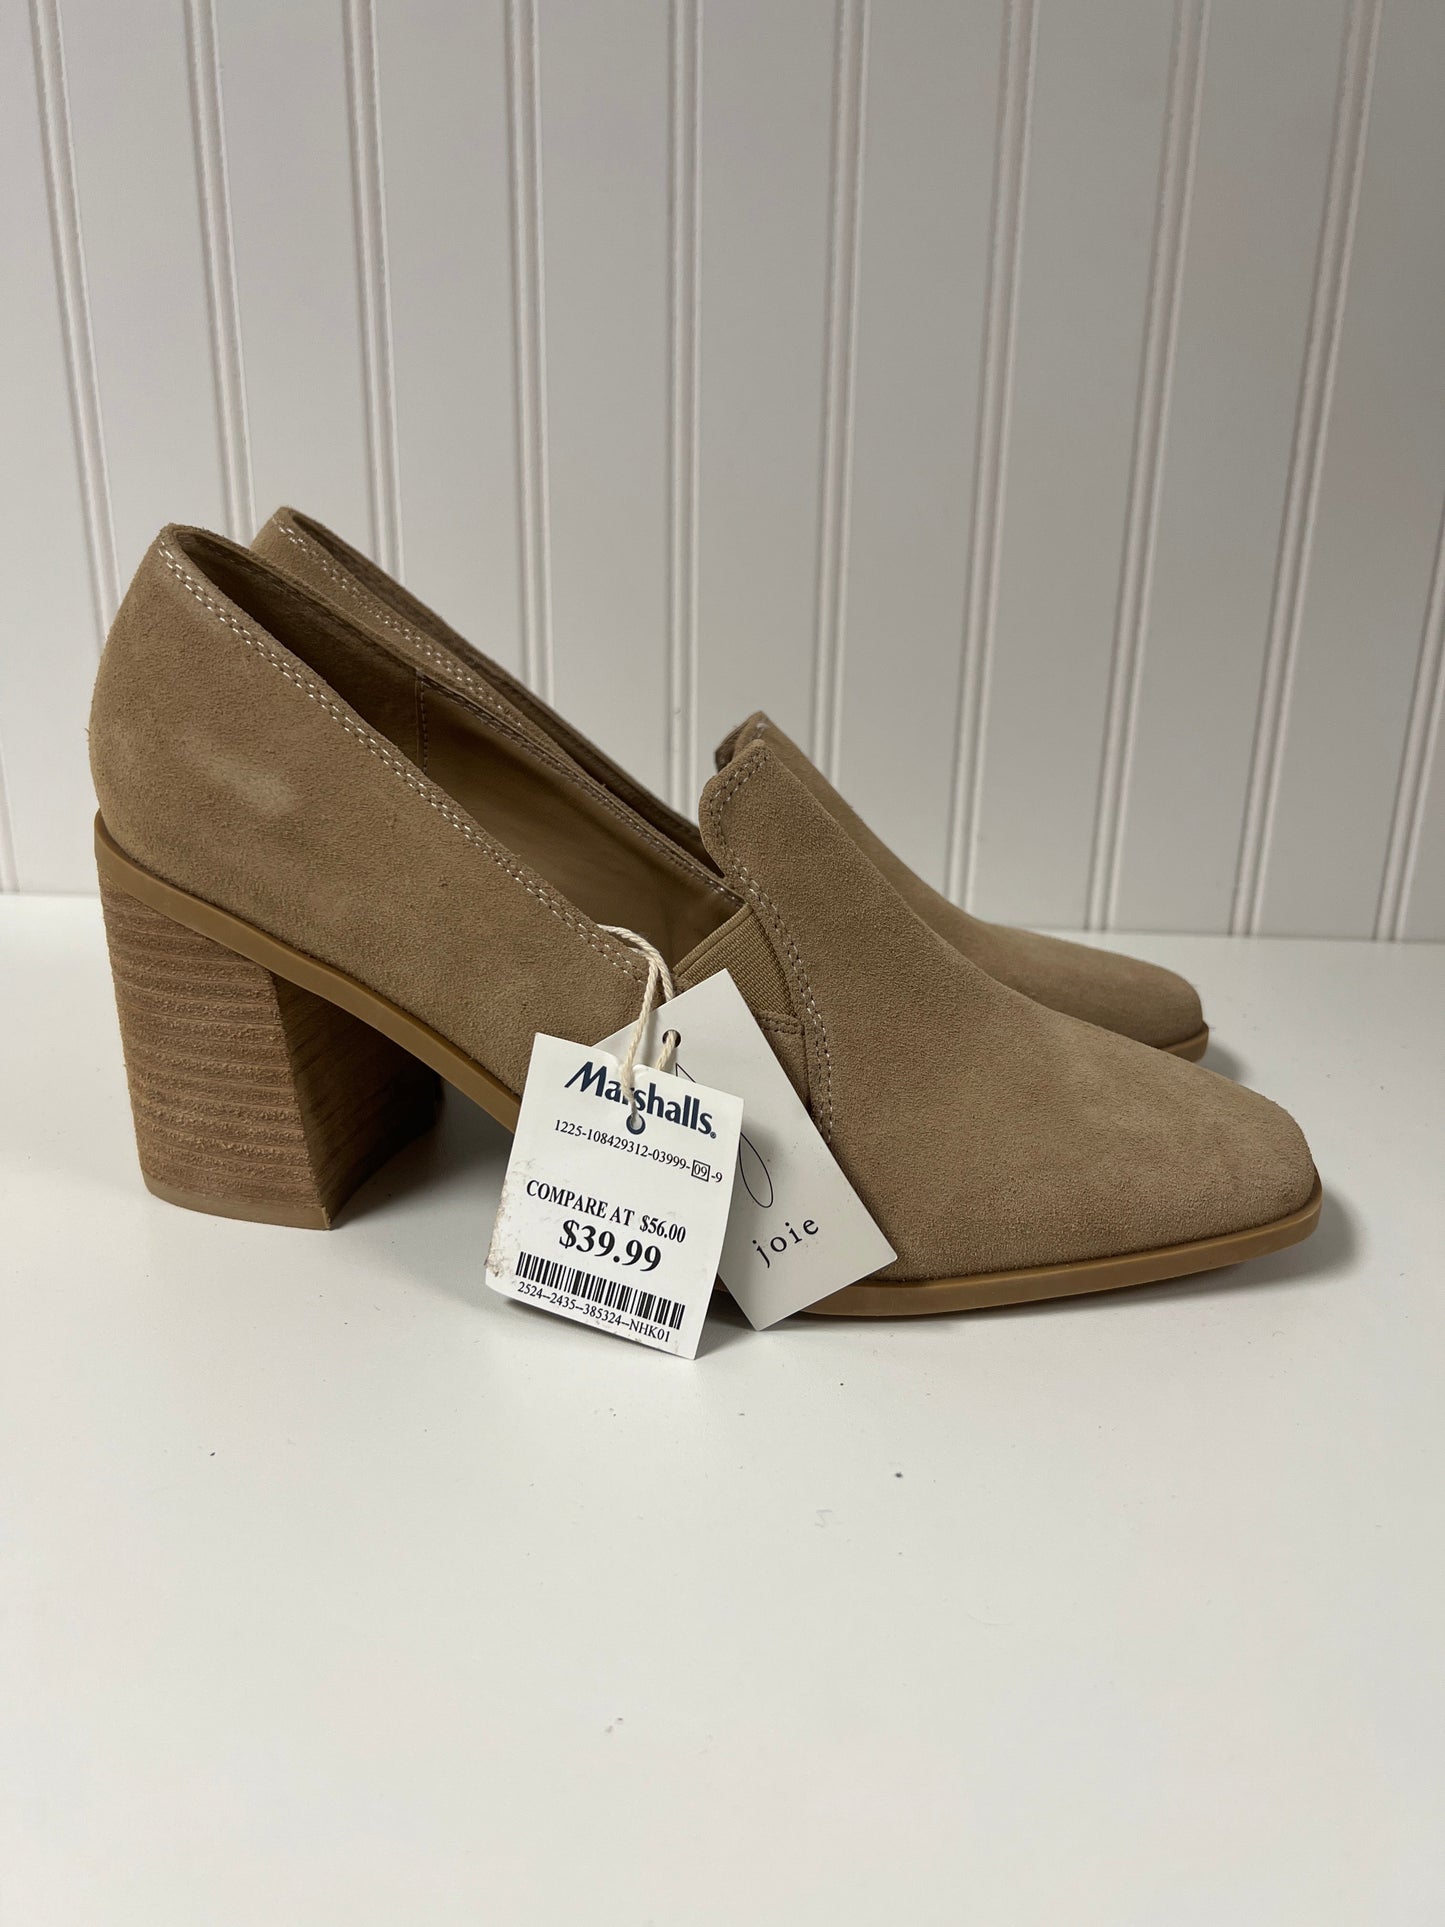 Tan Shoes Heels Block Joie, Size 8.5